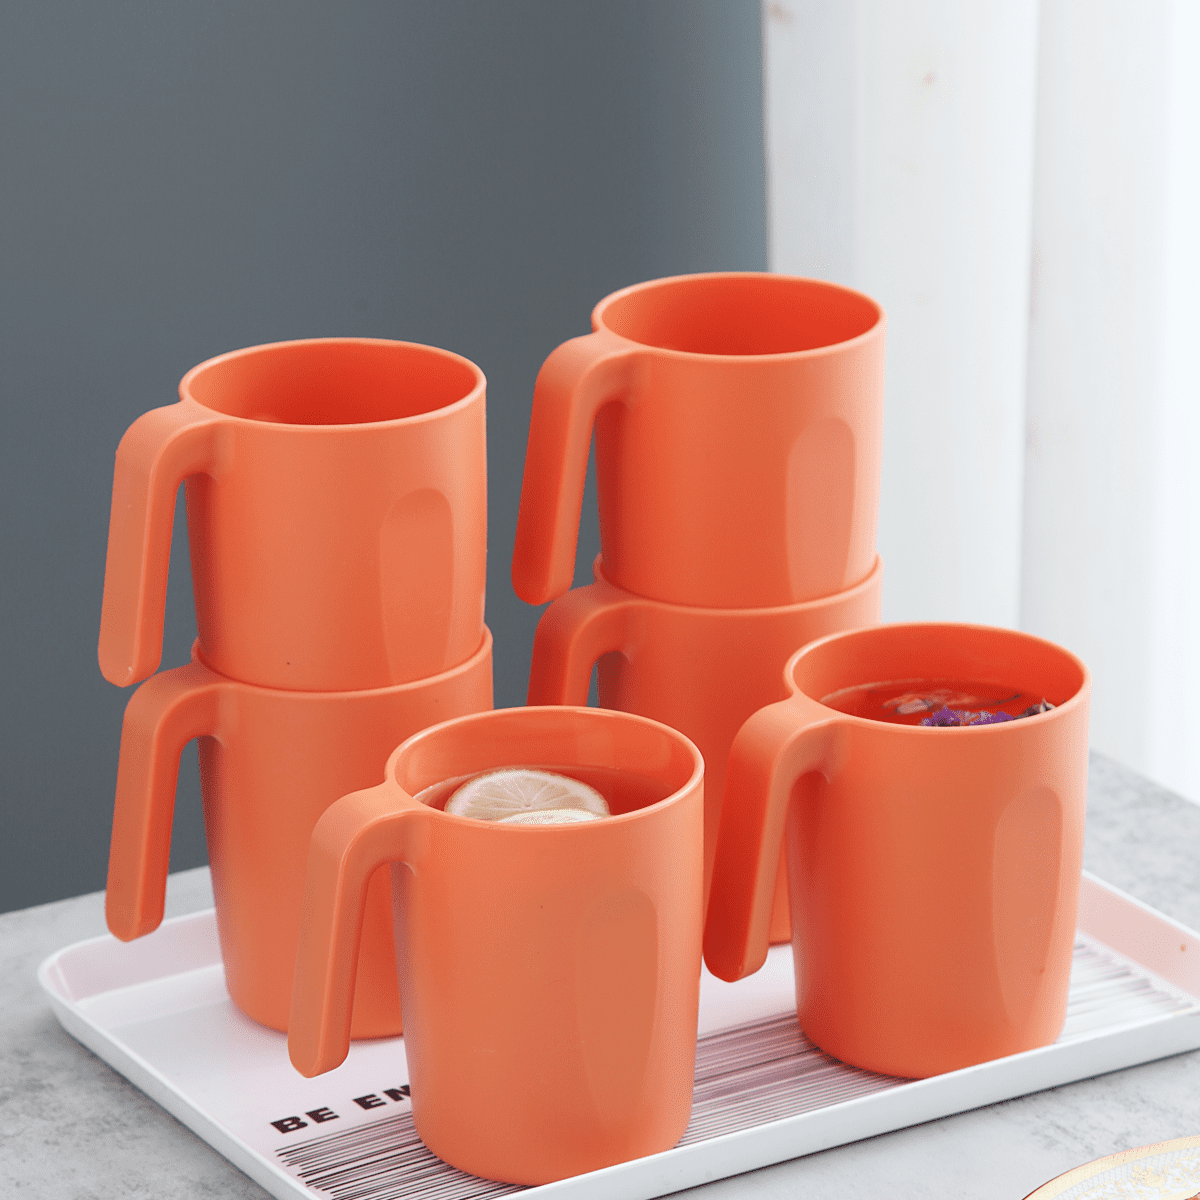 18pcs/set Reusable Plastic Cups Mugs Rainbow Colors Outdoor Picnic